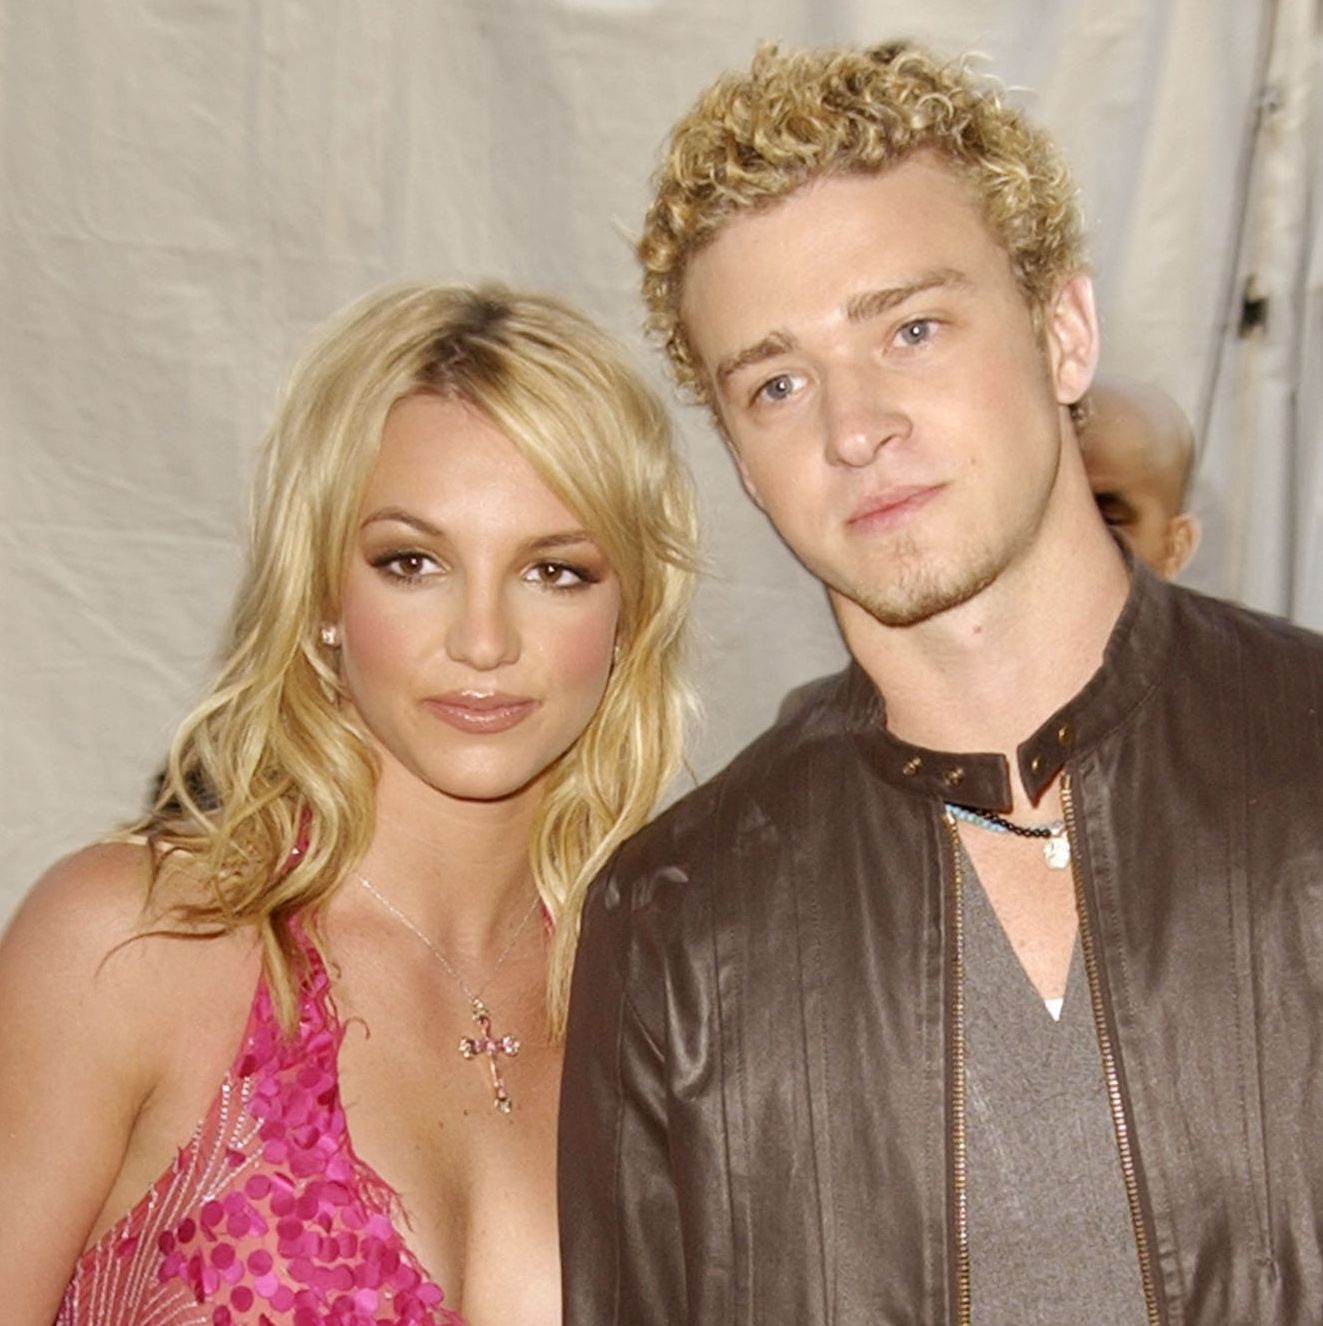 Britney Spears Accuses Justin Timberlake of Cheating in New Memoir